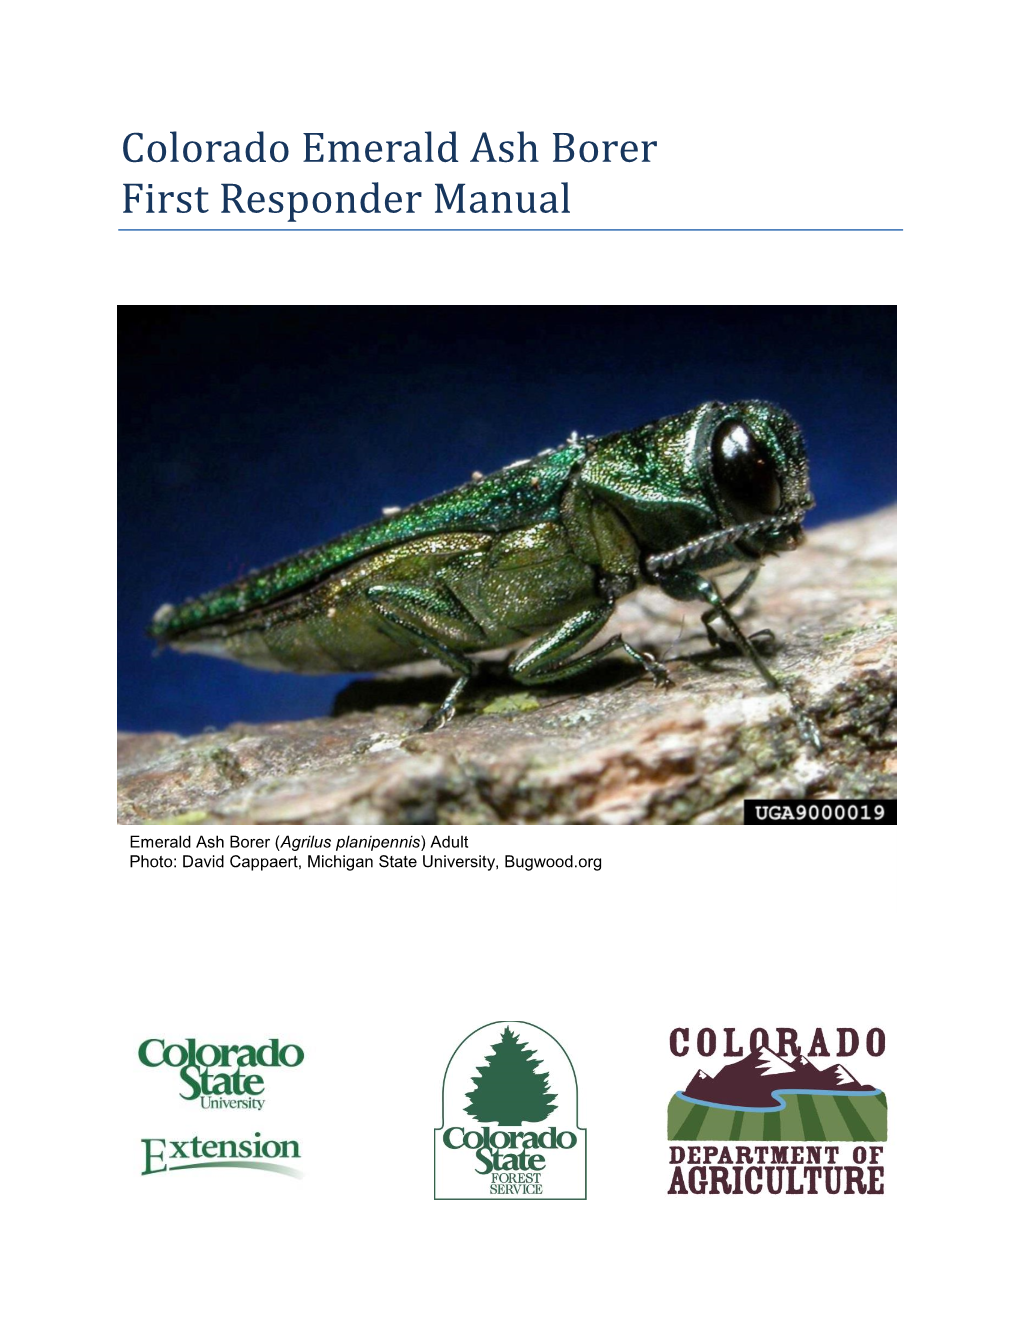 Colorado Emerald Ash Borer First Responder Manual